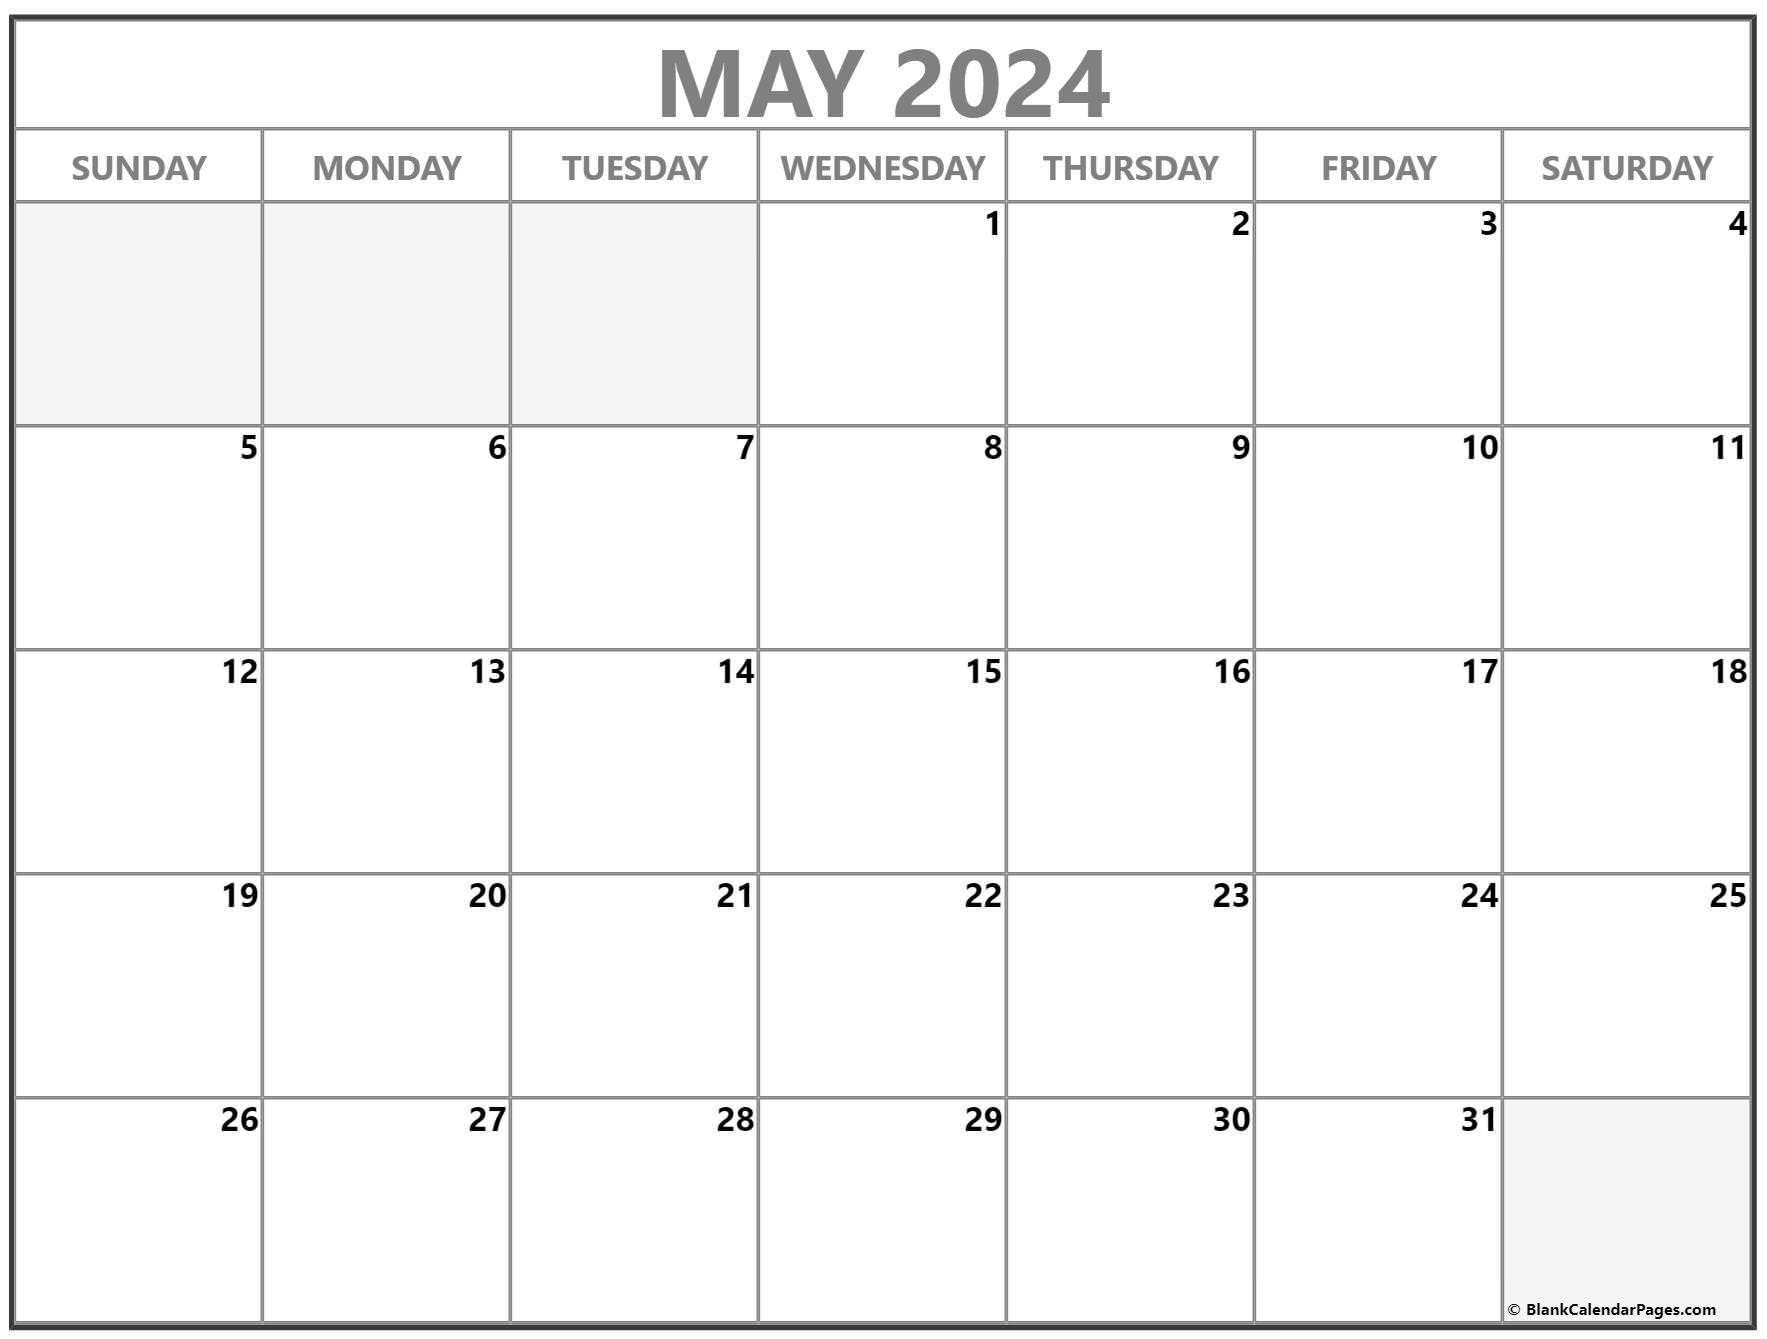 May 2022 Calendar Free Printable Calendar Templates